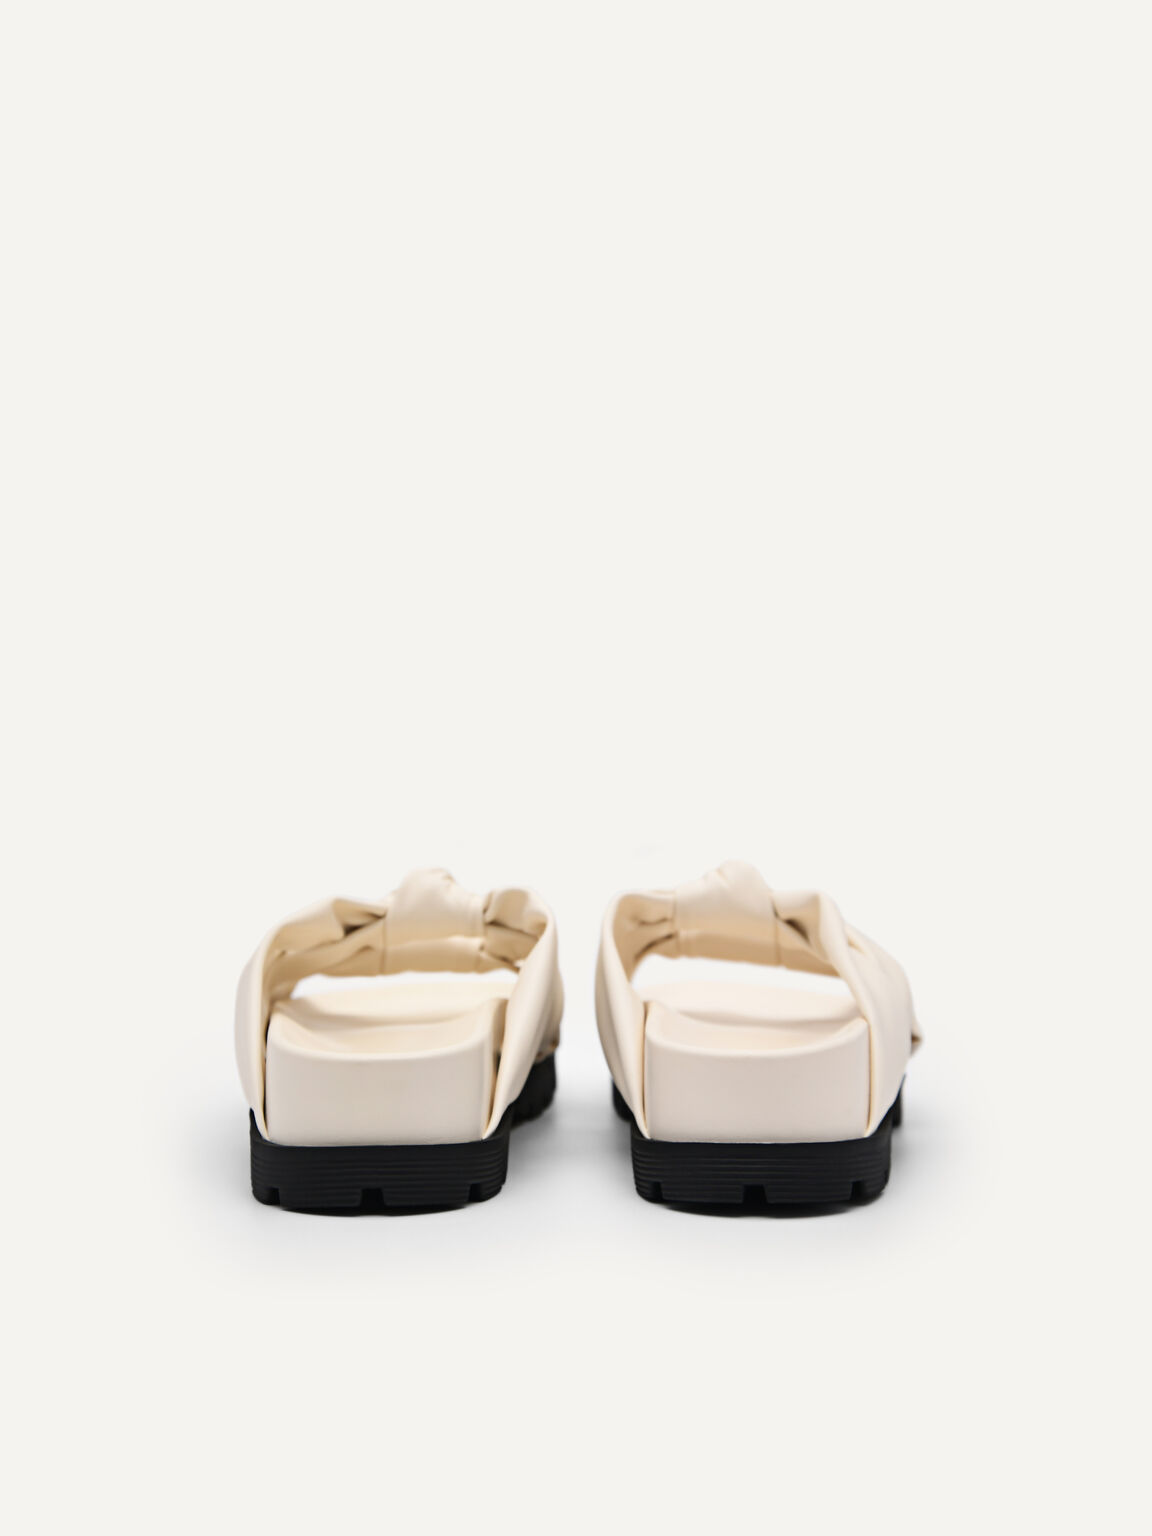 Celeste Knot Sandals, Chalk